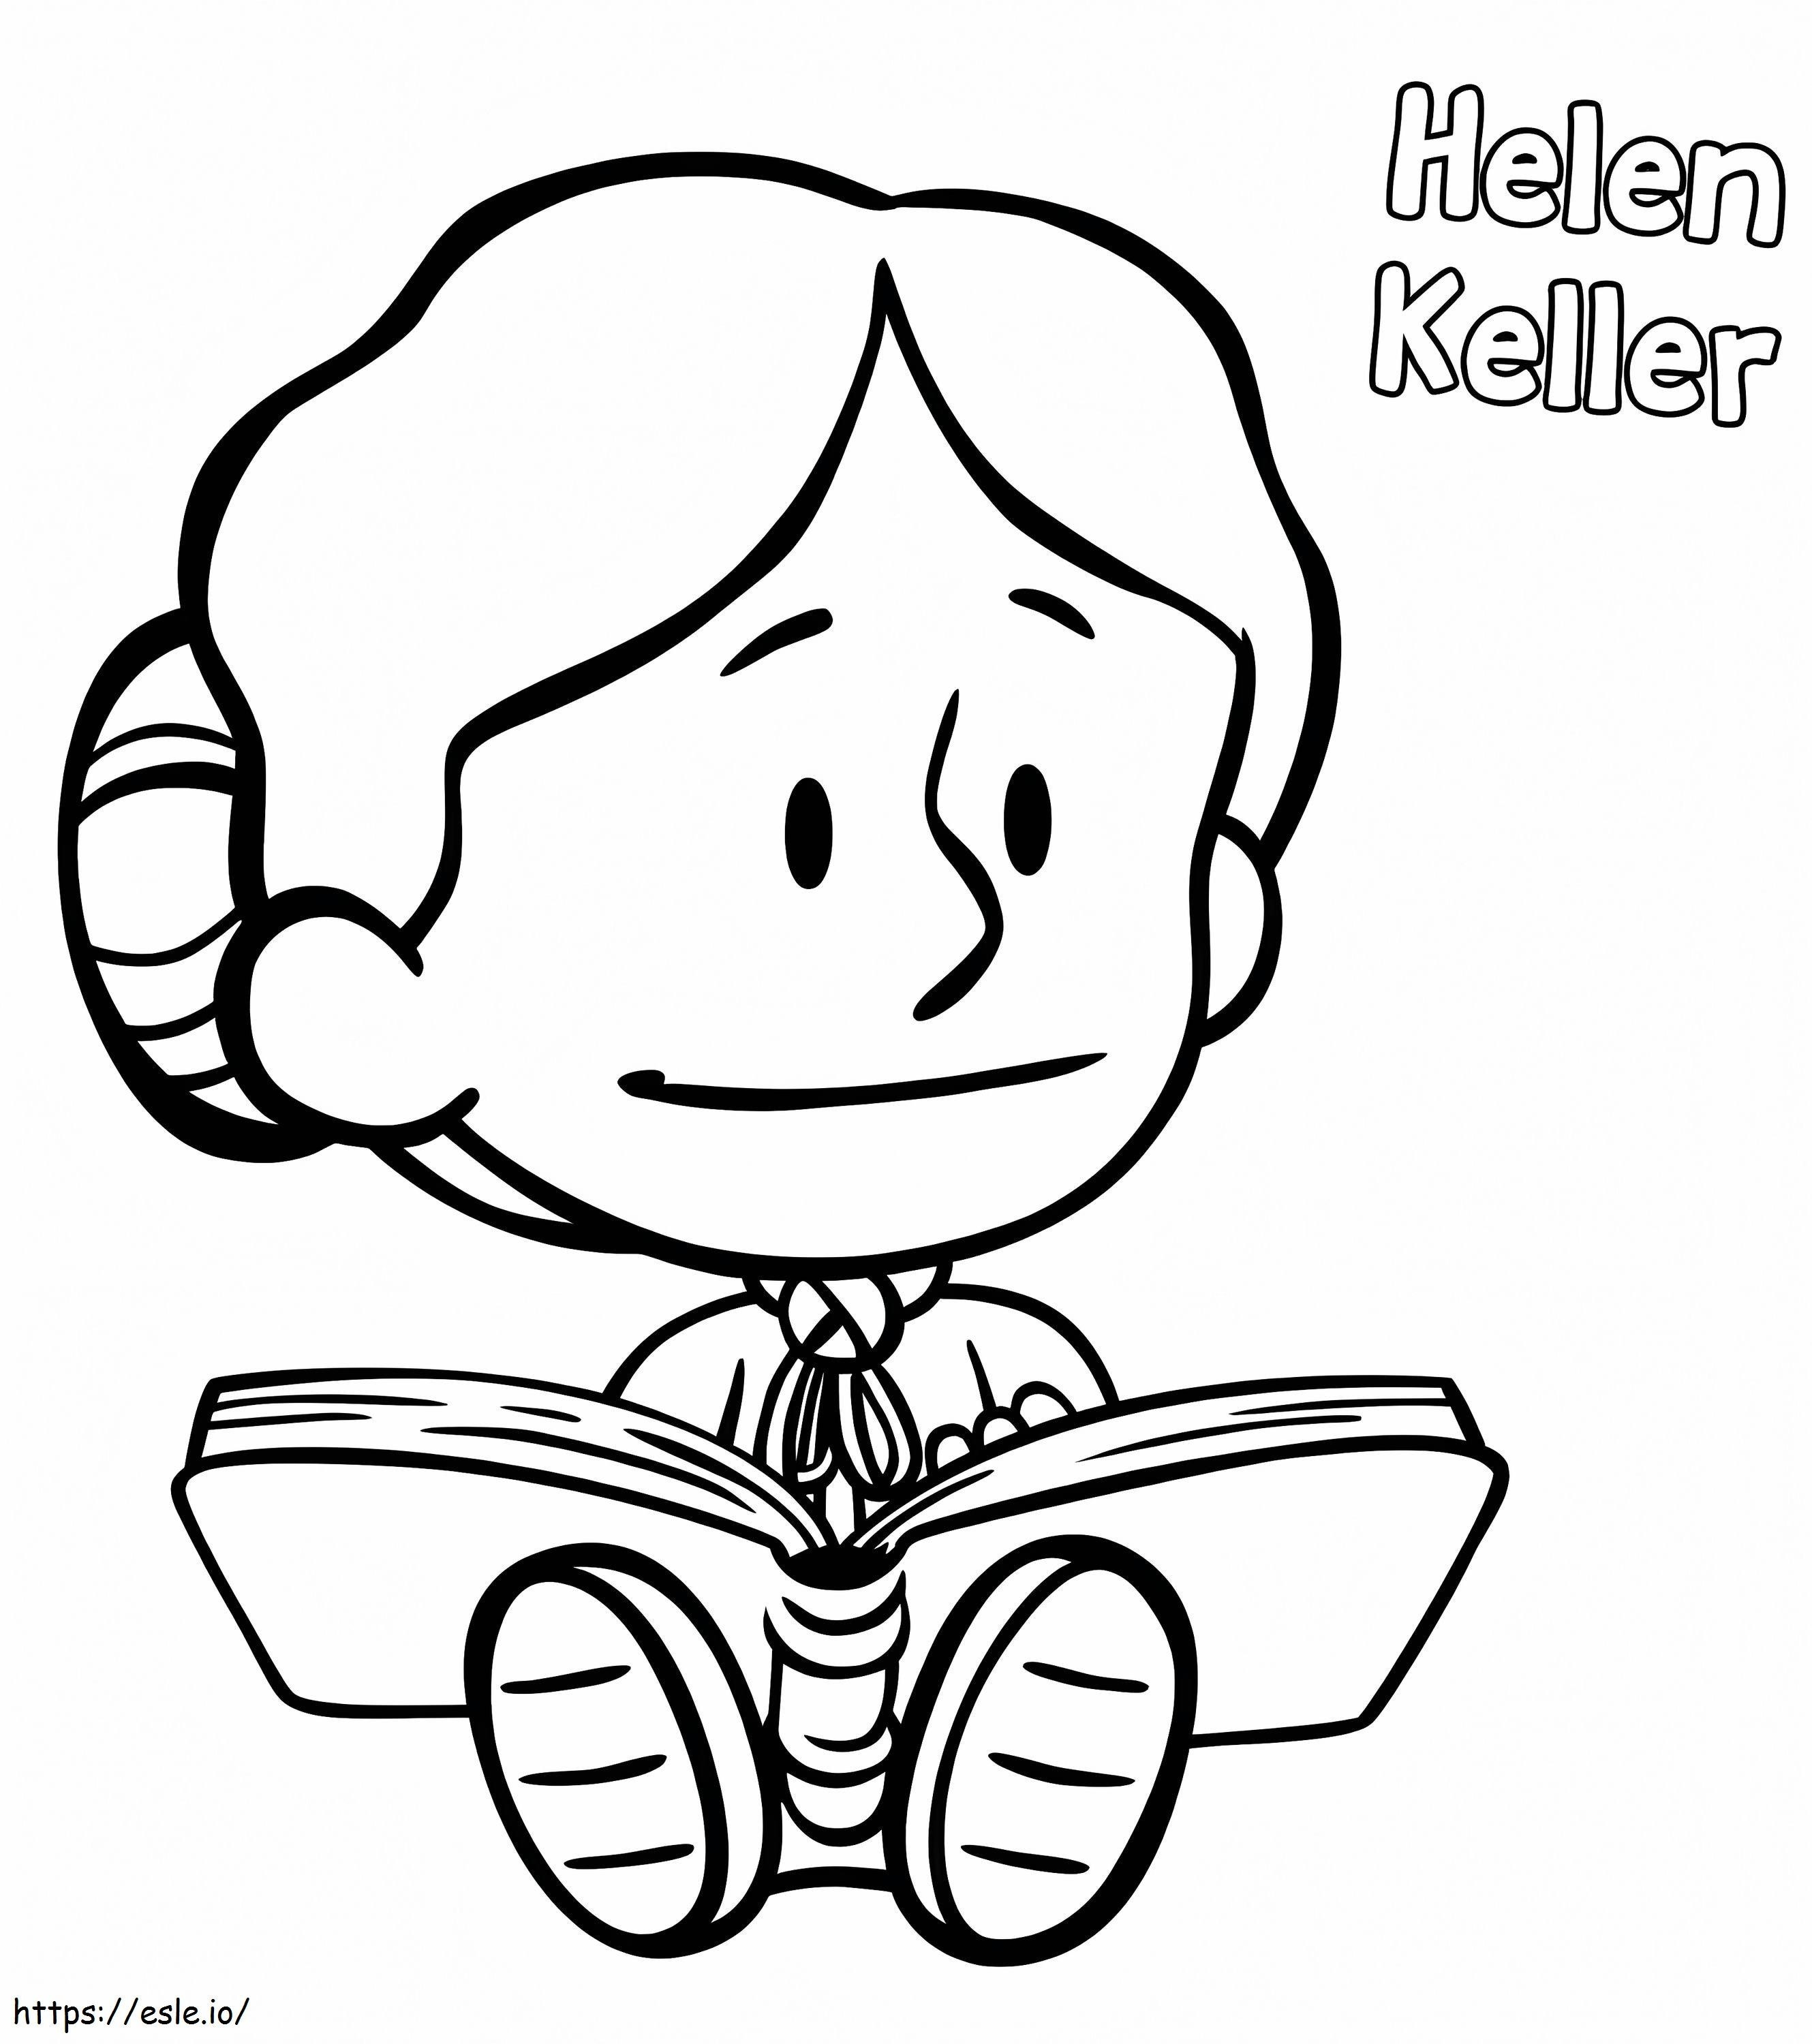 Helen Keller z Xaviera Riddle'a kolorowanka